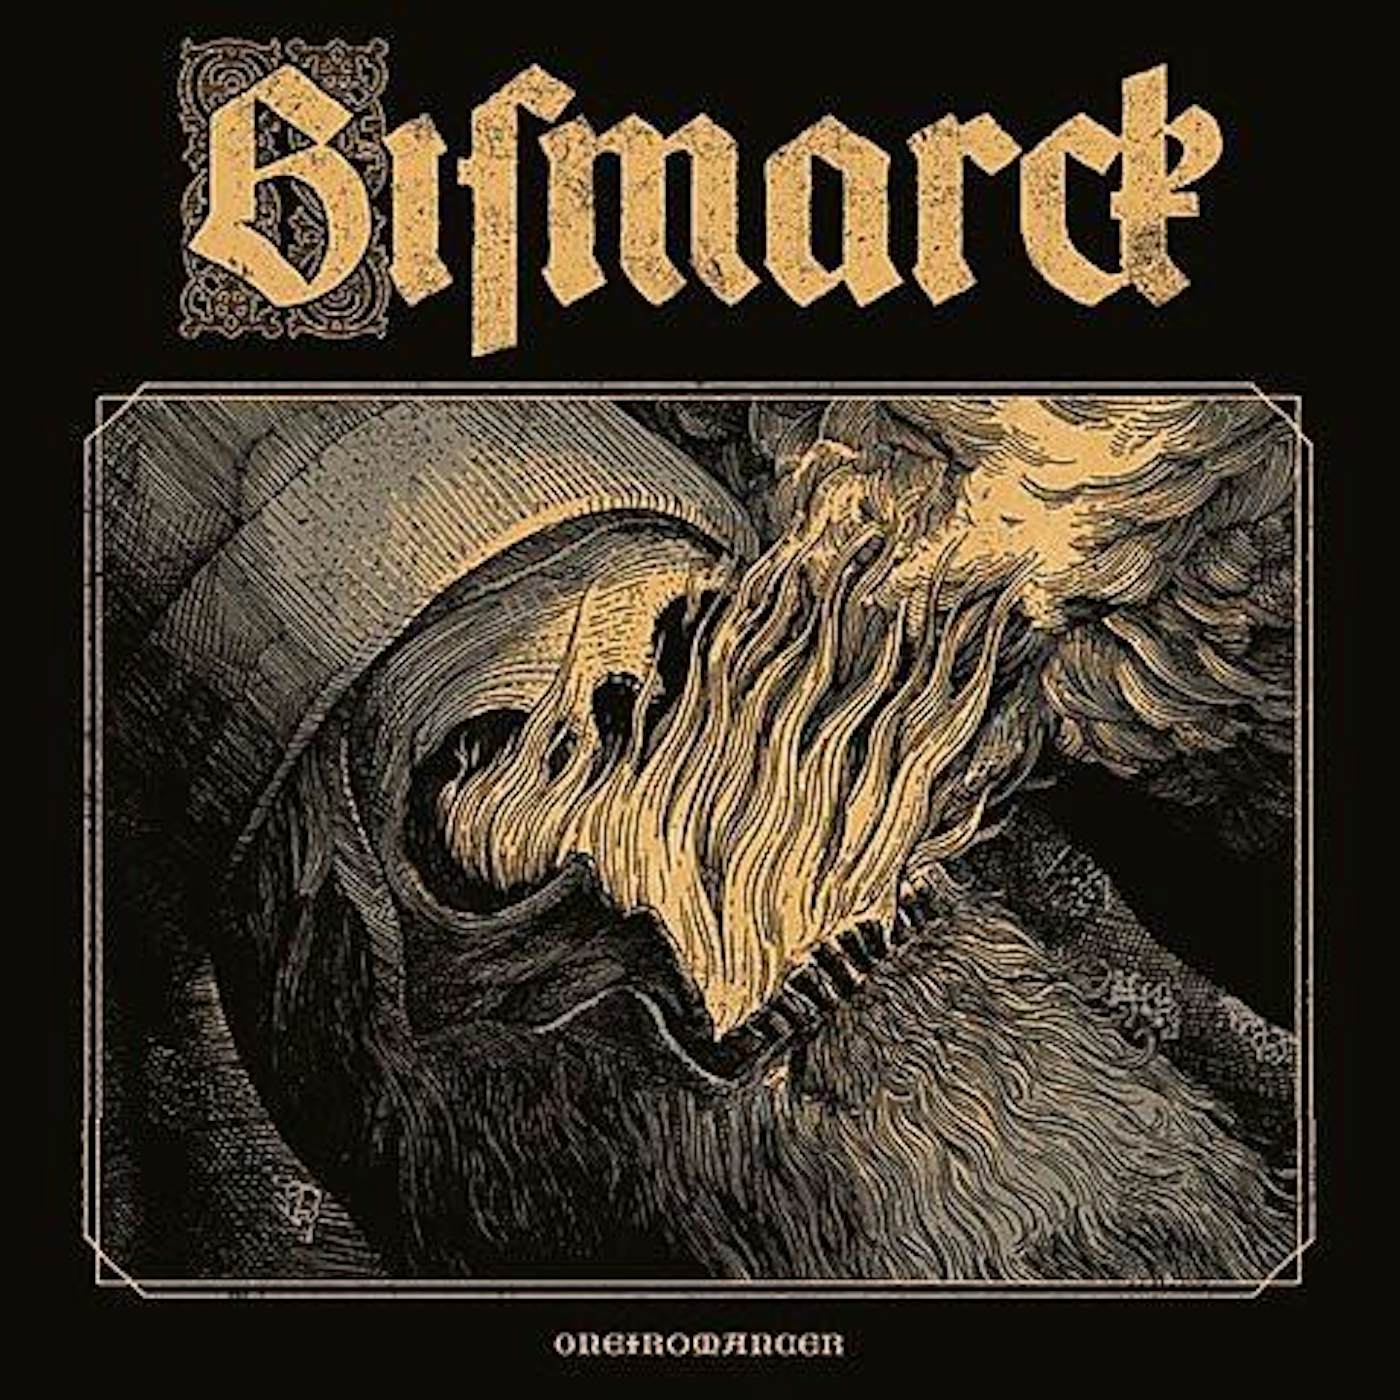 Bismarck Oneiromancer Vinyl Record